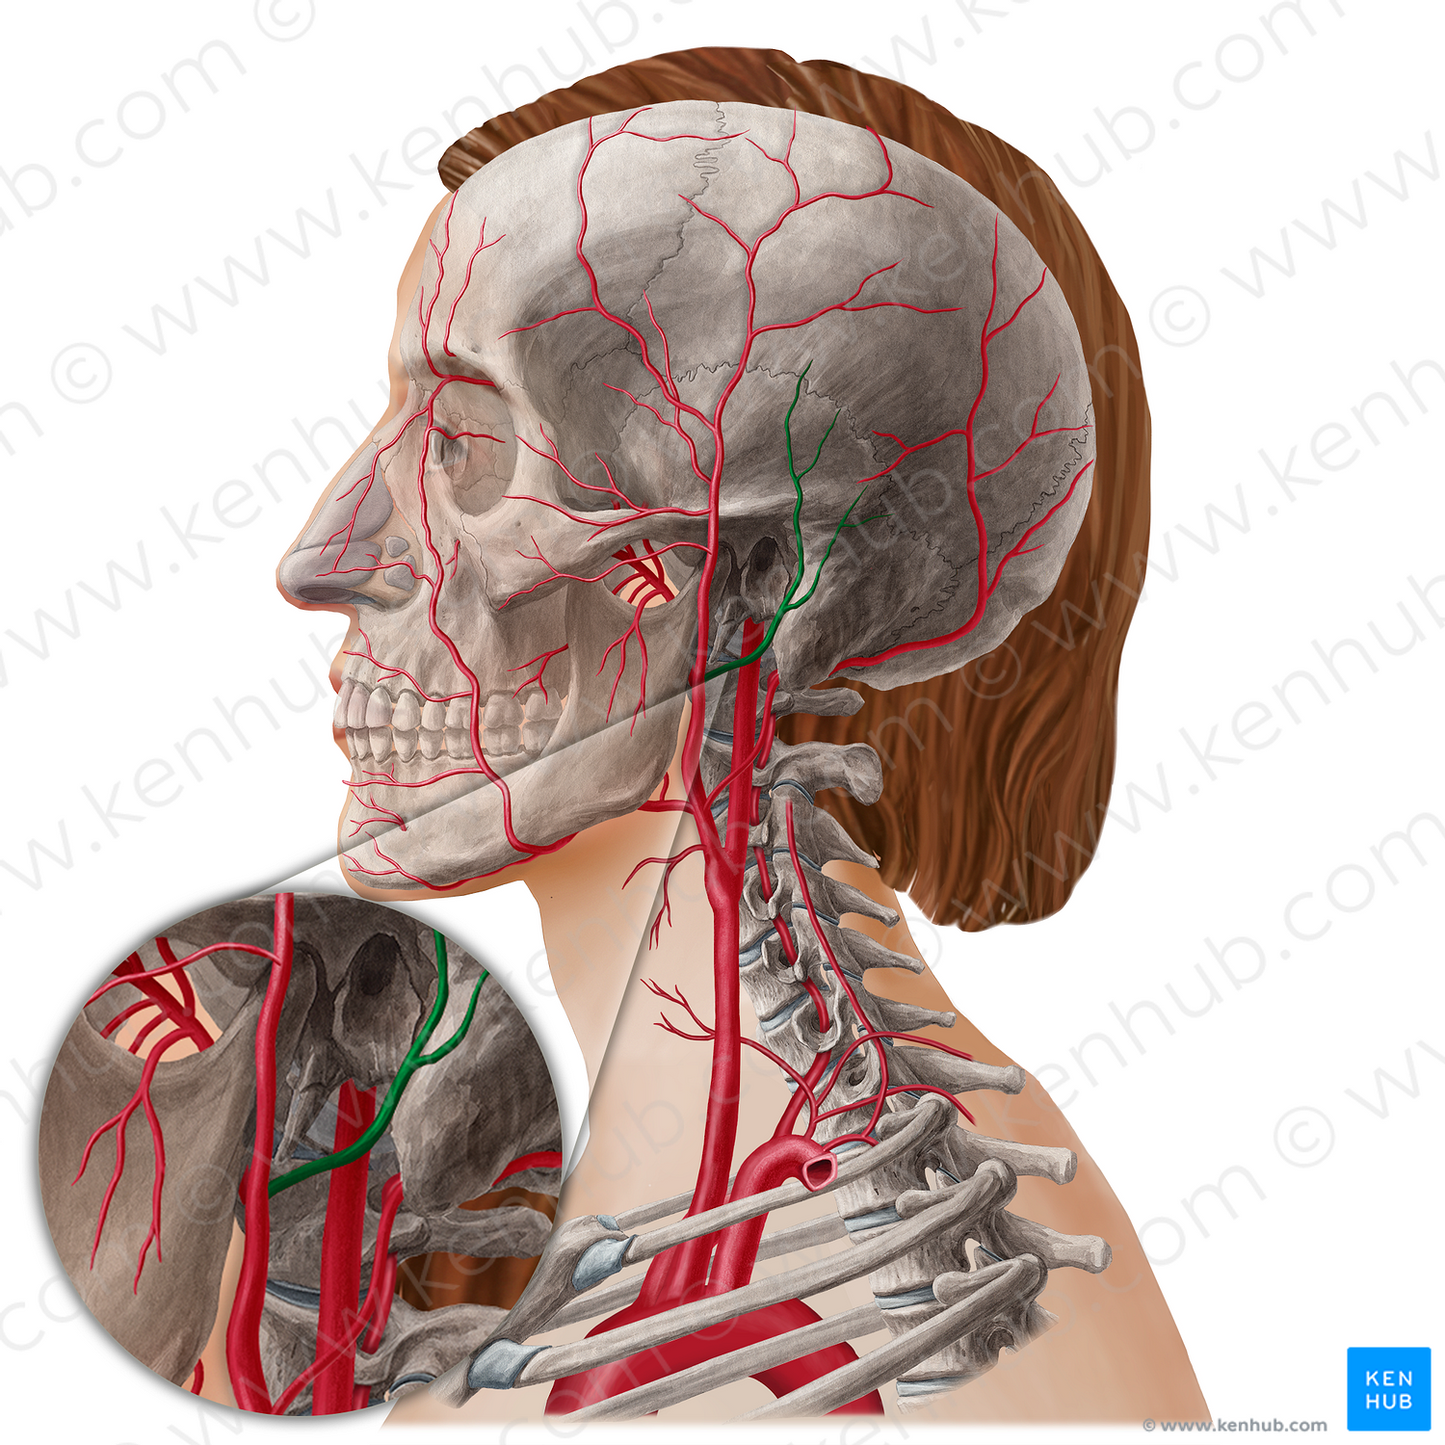 Posterior auricular artery (#21802)